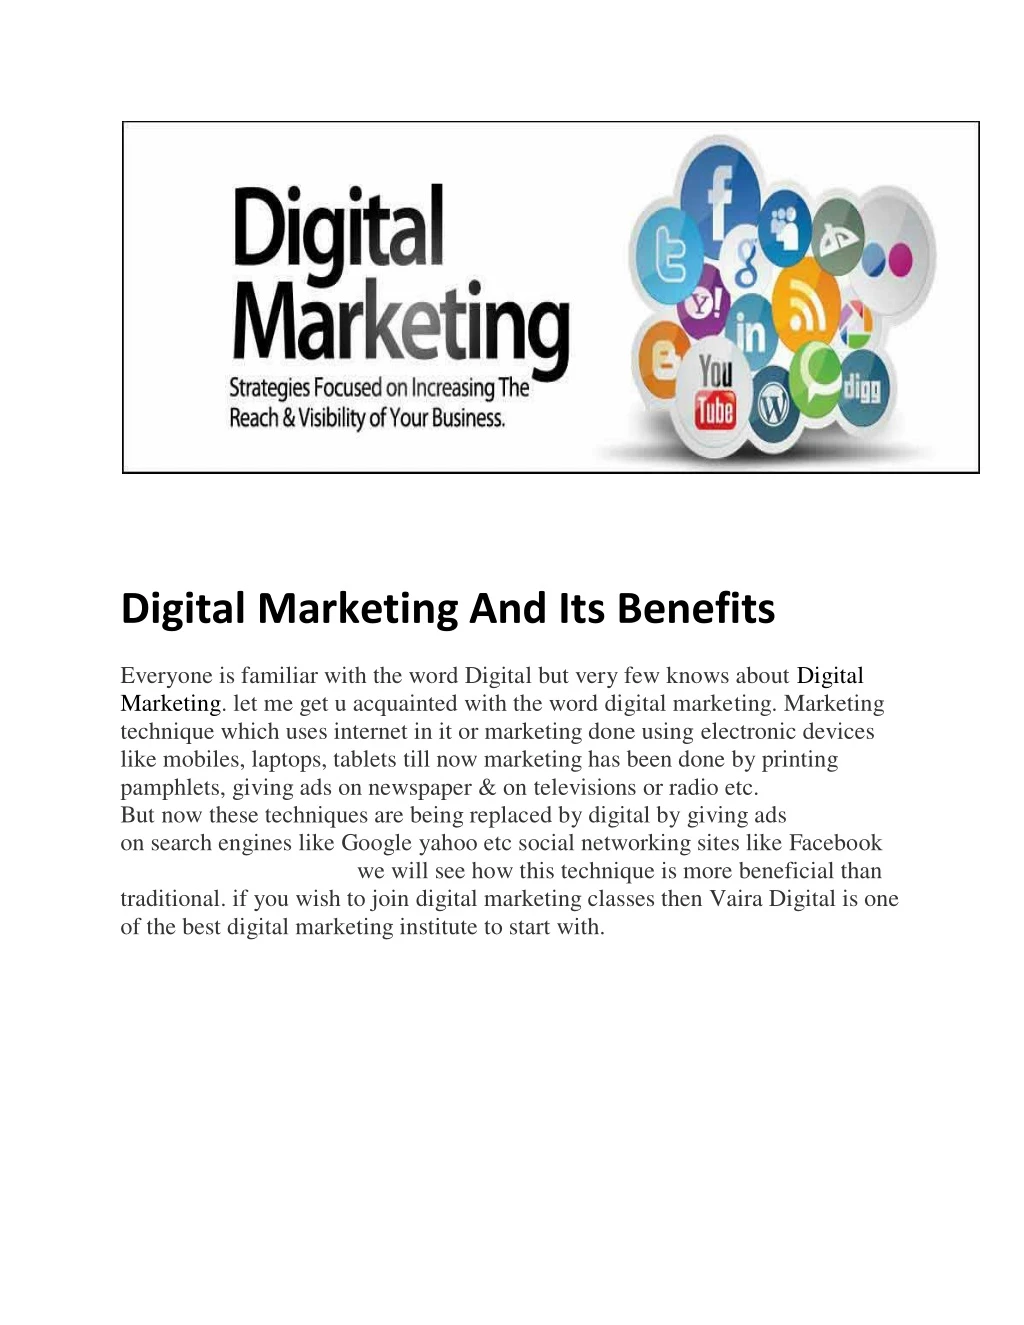 digital marketing and its benefits